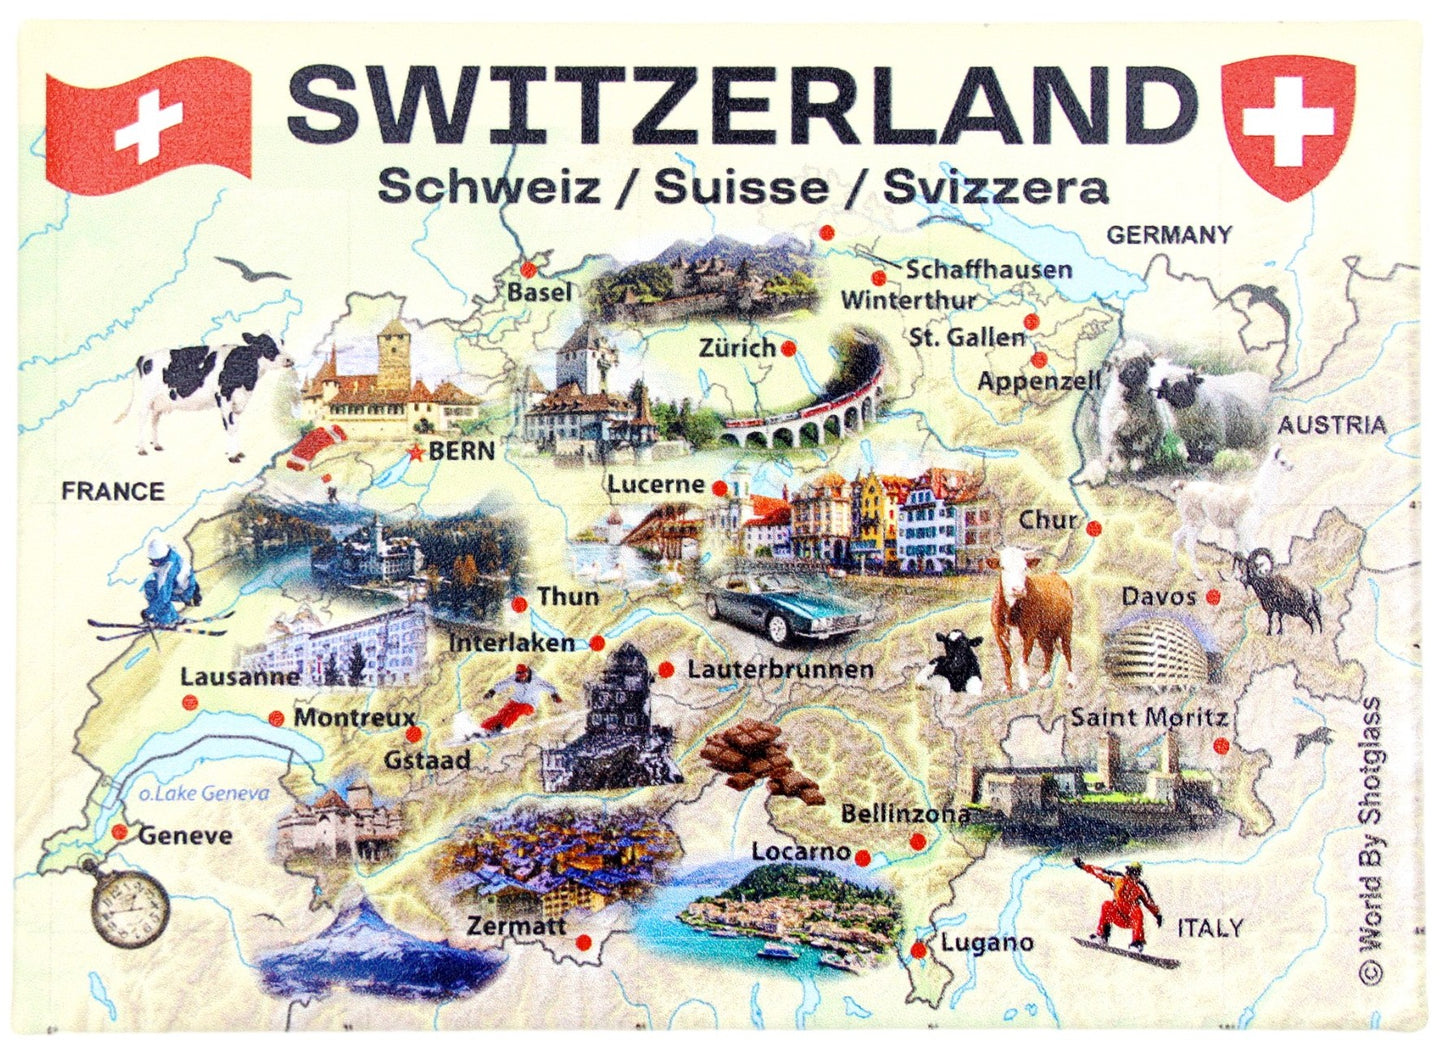 Switzerland Graphic Map and Attractions Souvenir Fridge Magnet 2.5 X 3.5